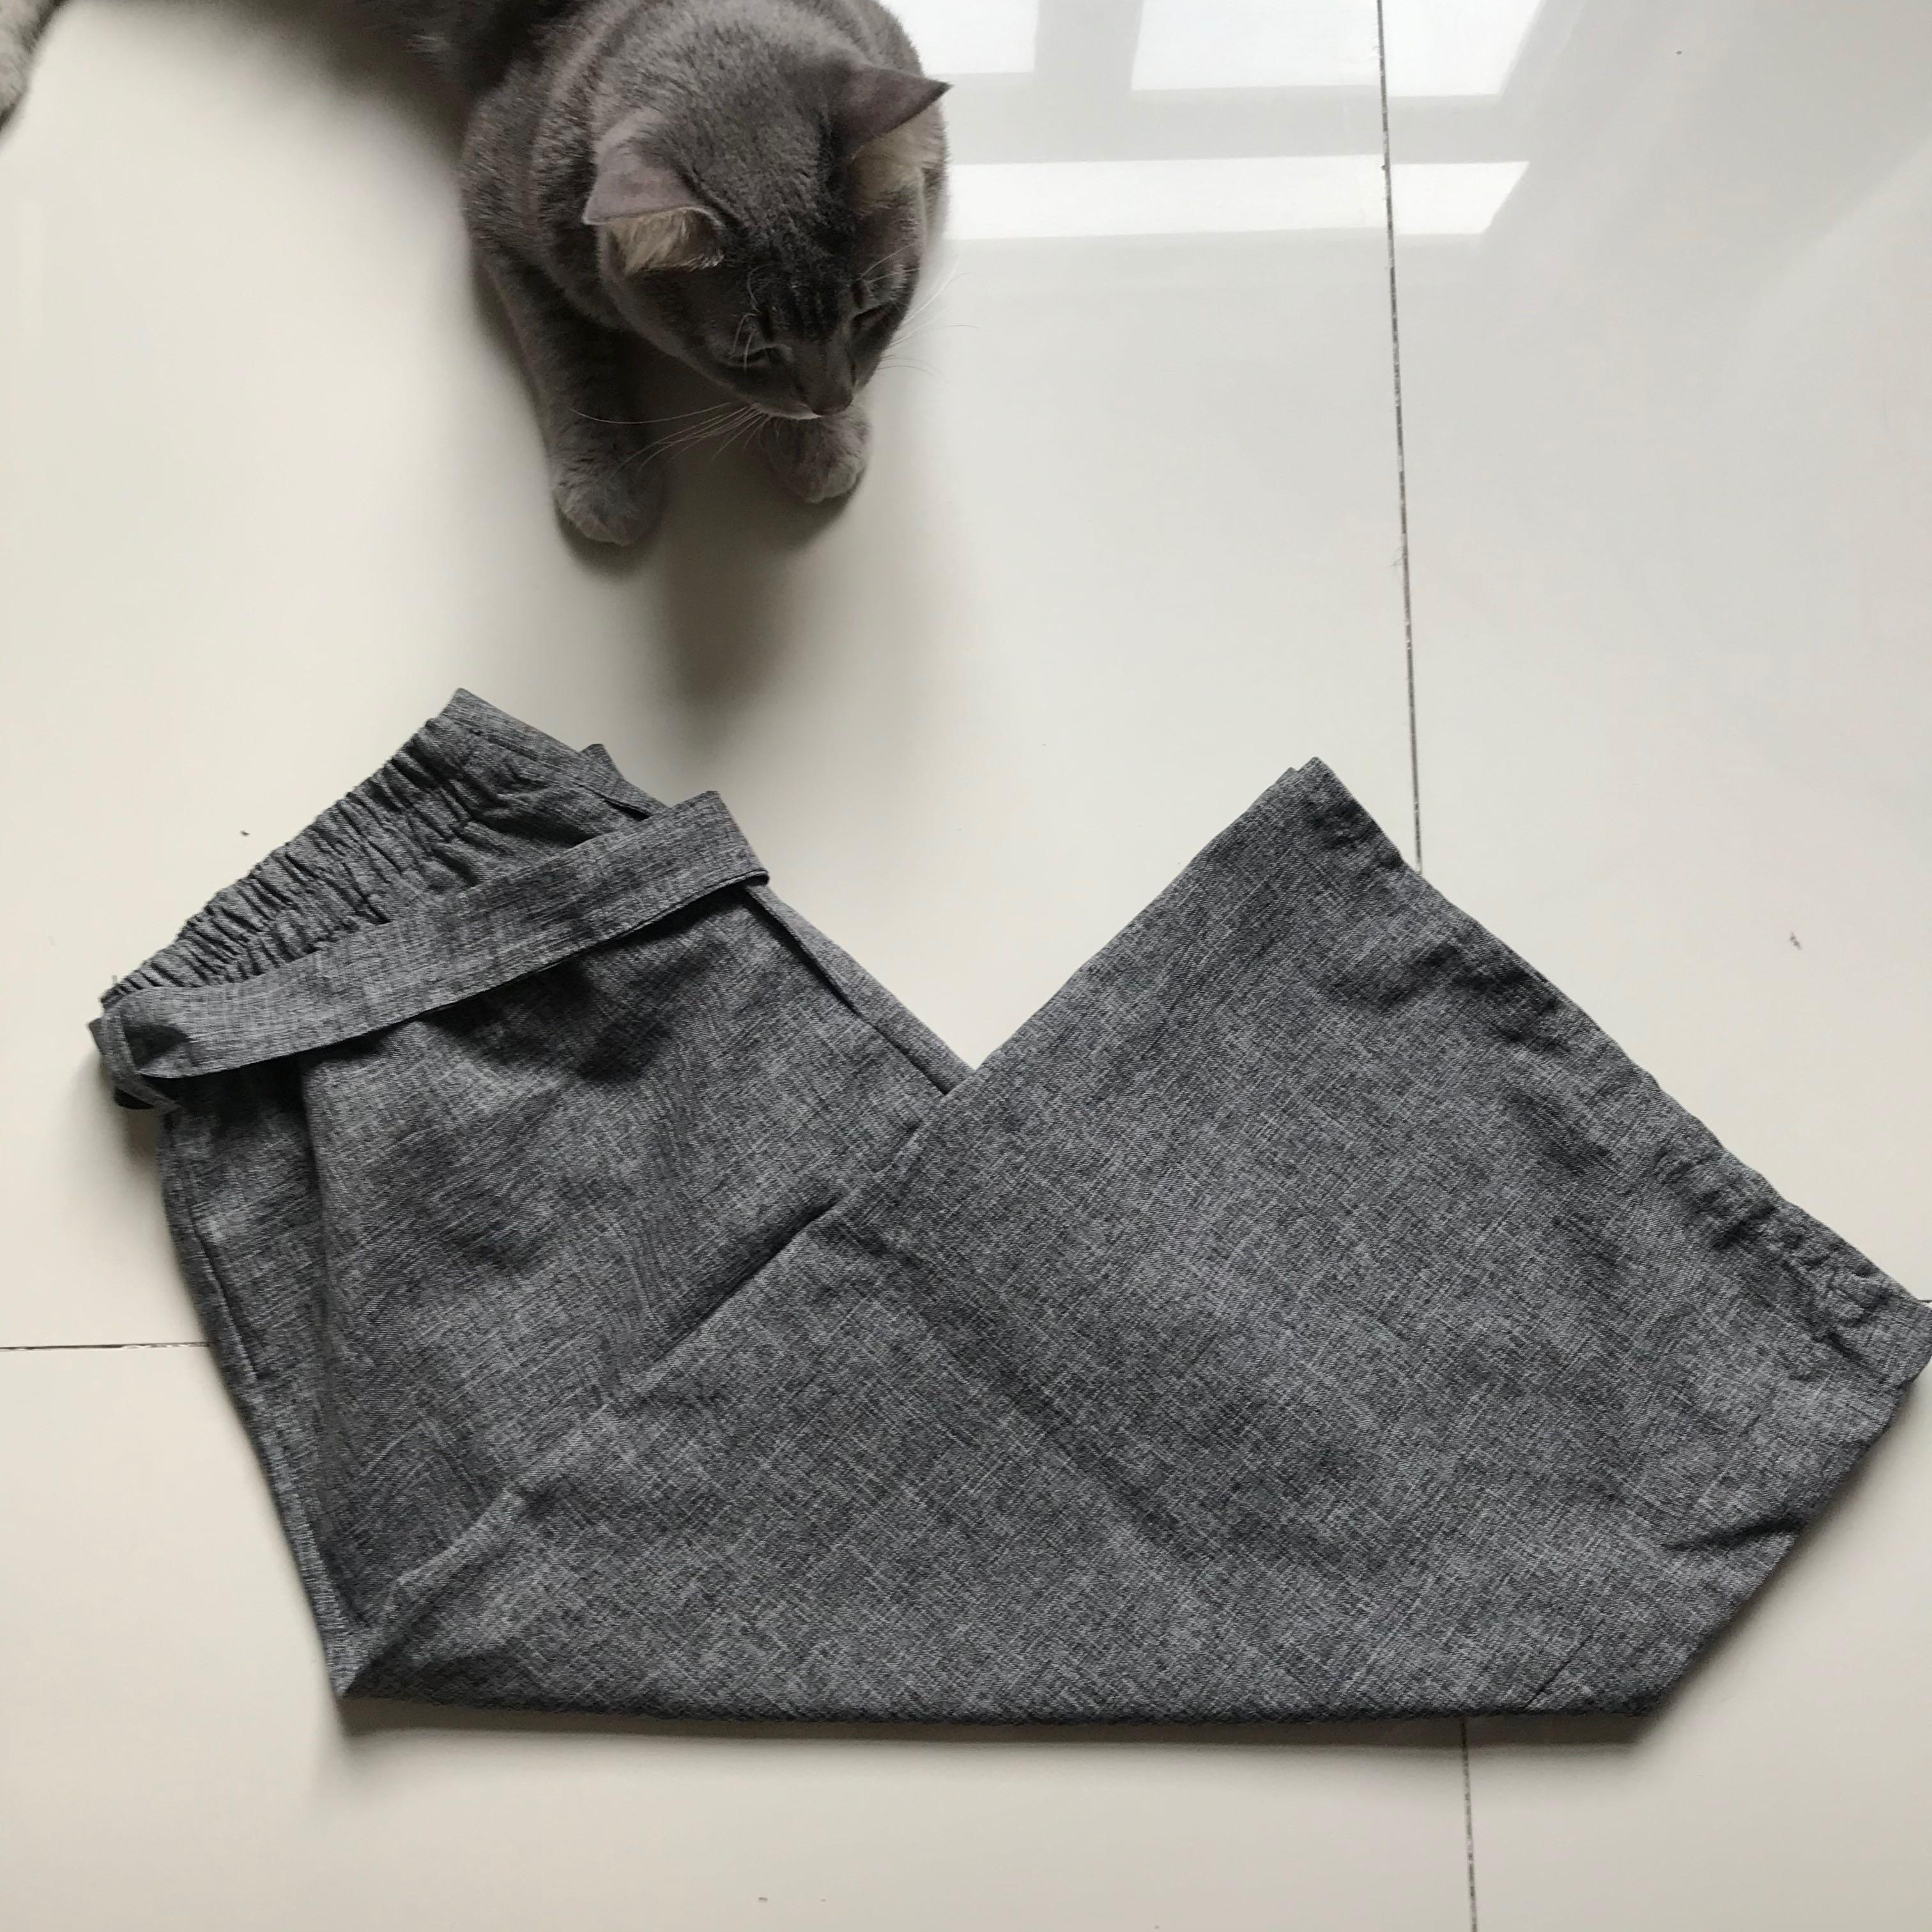 womens gray corduroy pants